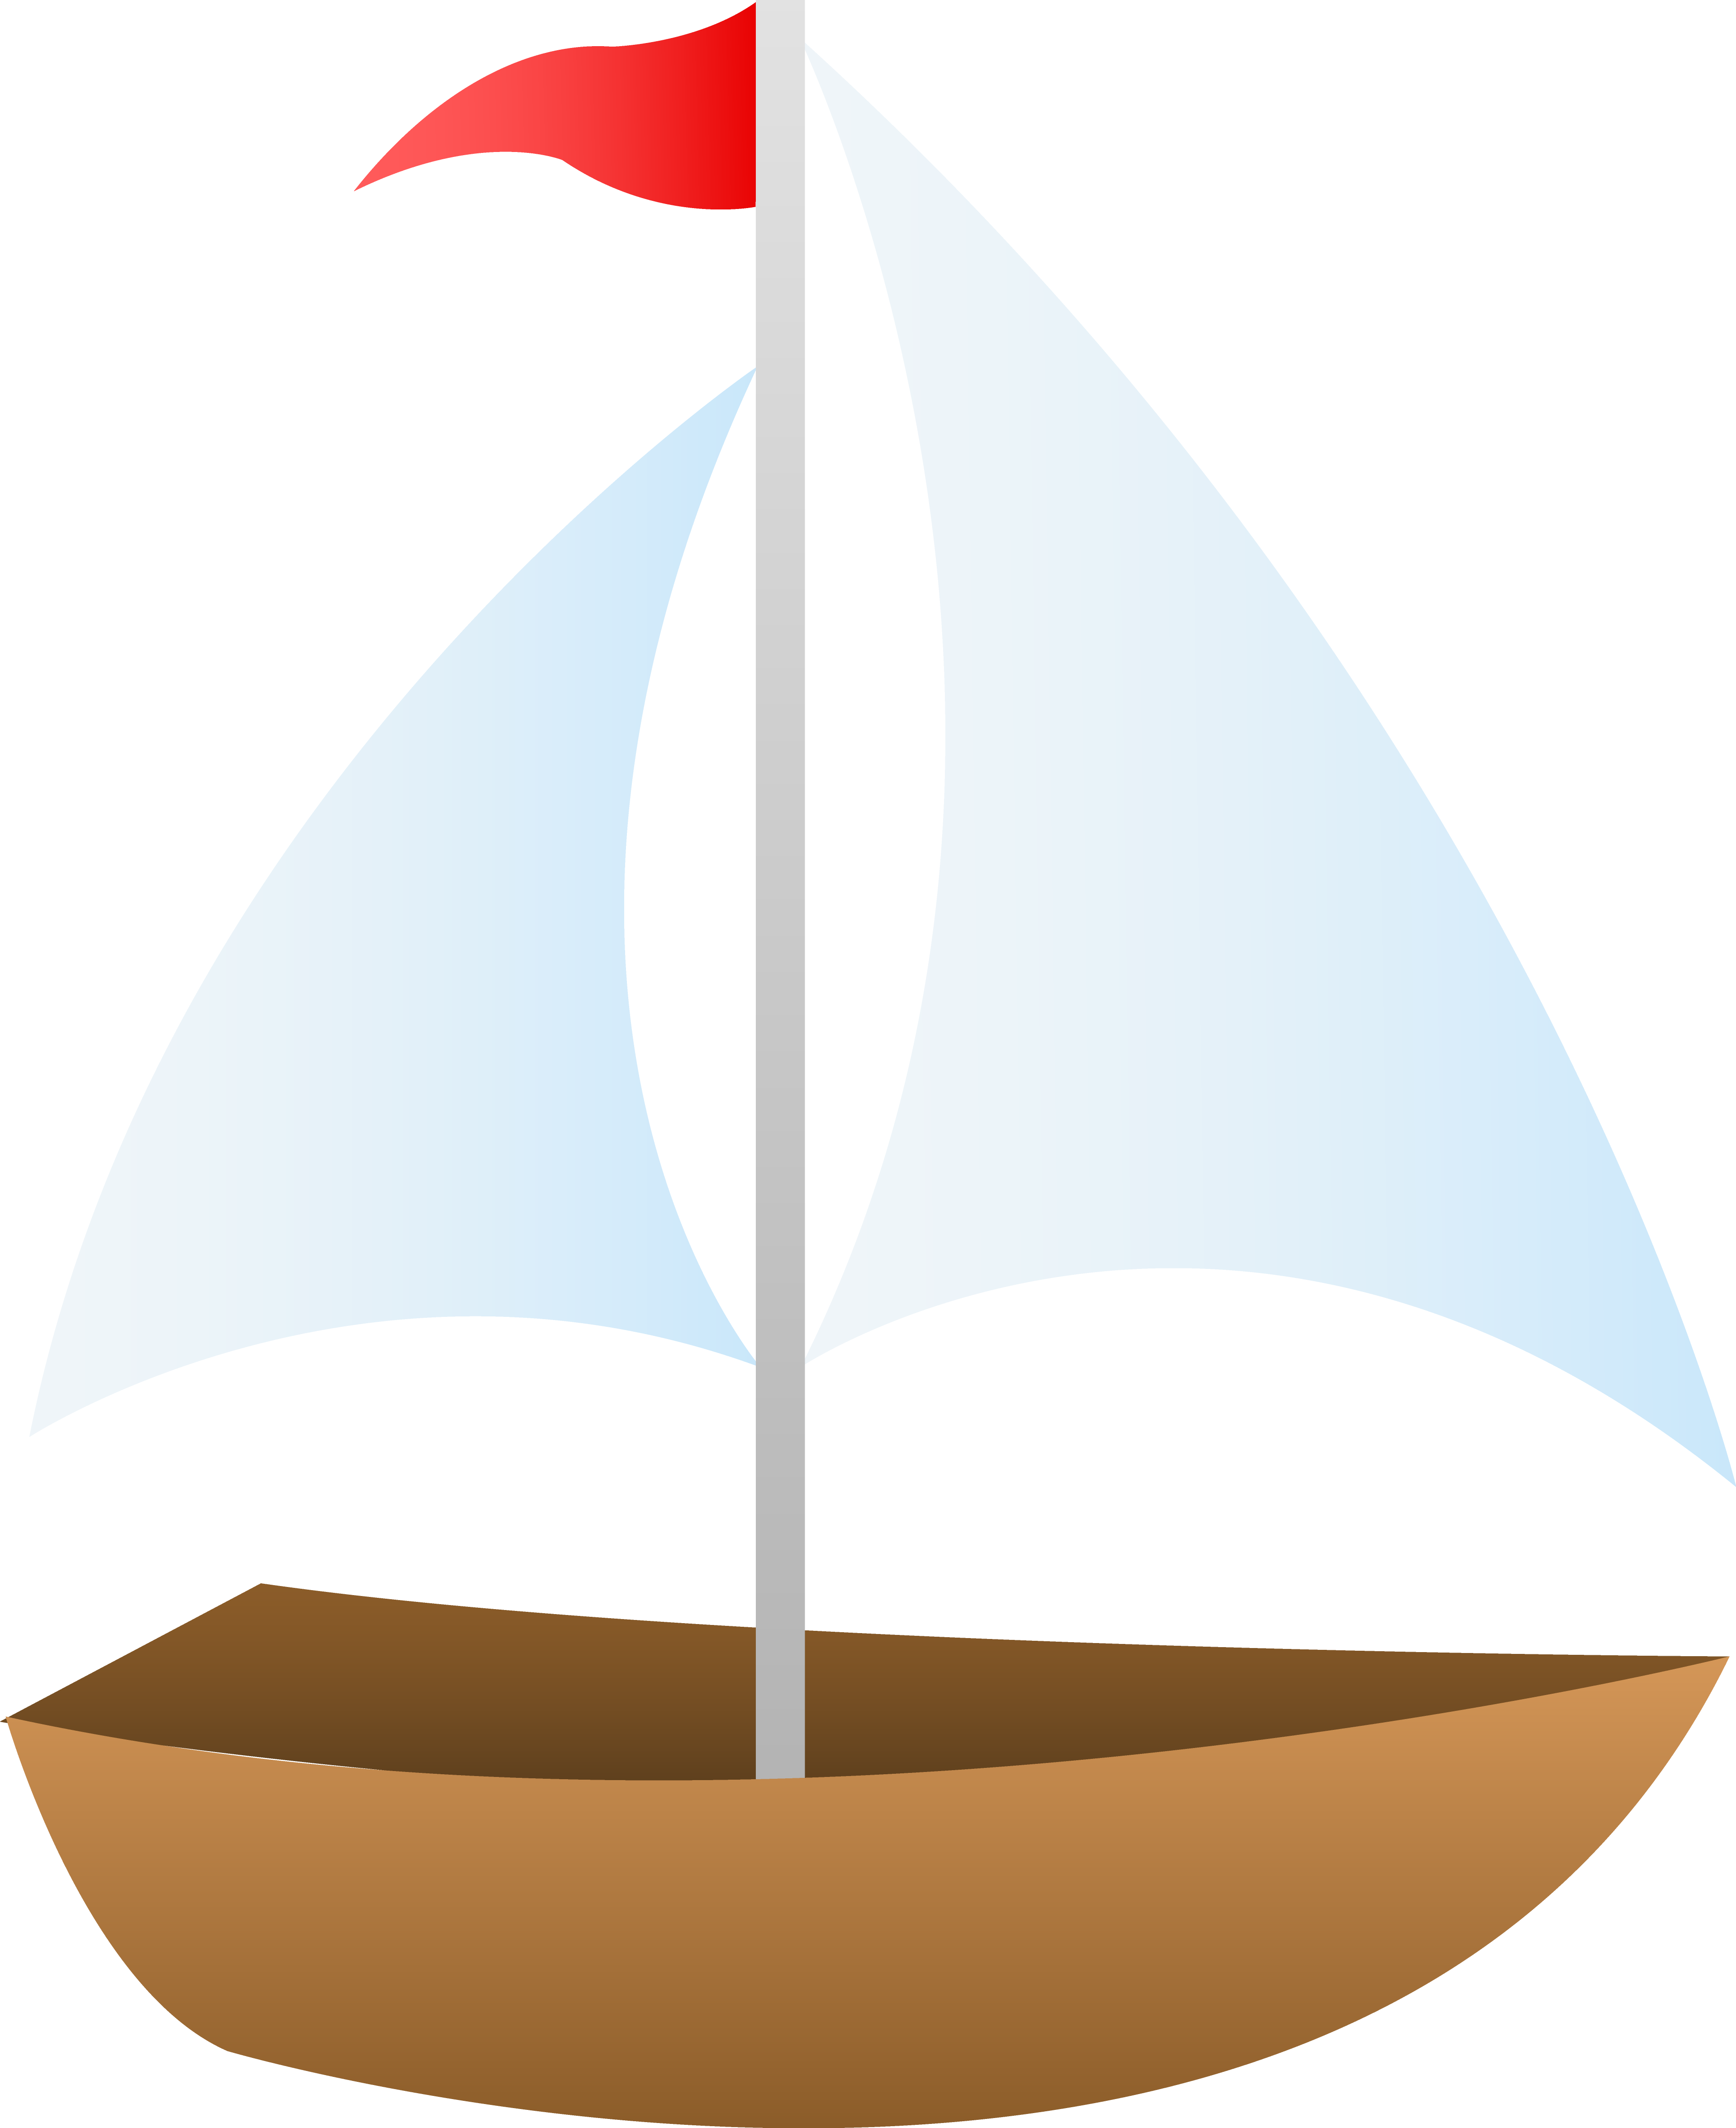 mojumbo sailboat clipart